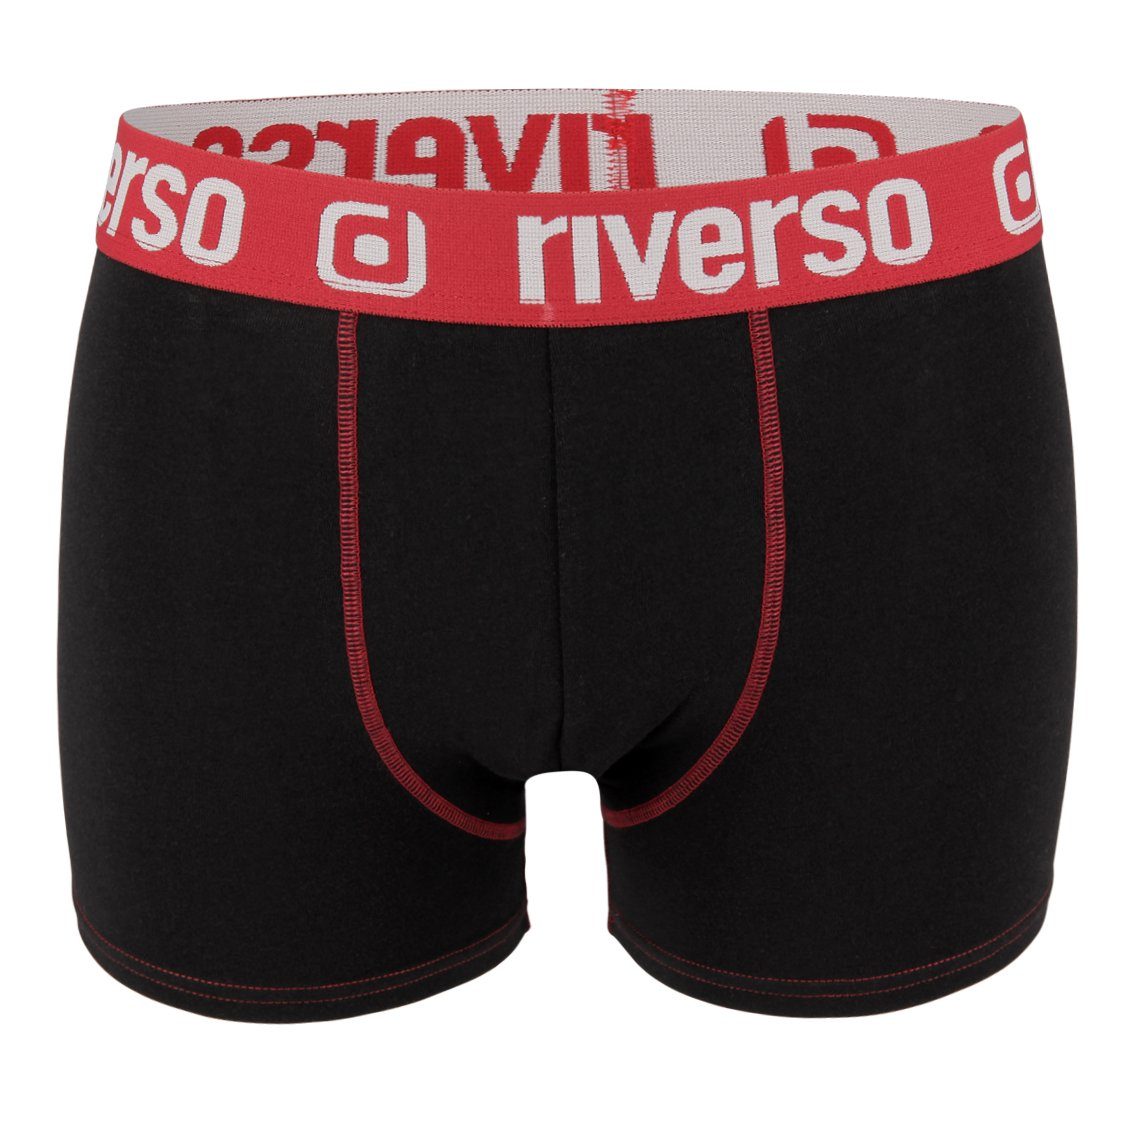 8 riverso (RVS1BCX6PK8M) Stretch Unterhosen (Vorteilspack, mit 6-St) Farbmix Retroshorts Basic RIVJONNY Boxer Boxershorts Herren